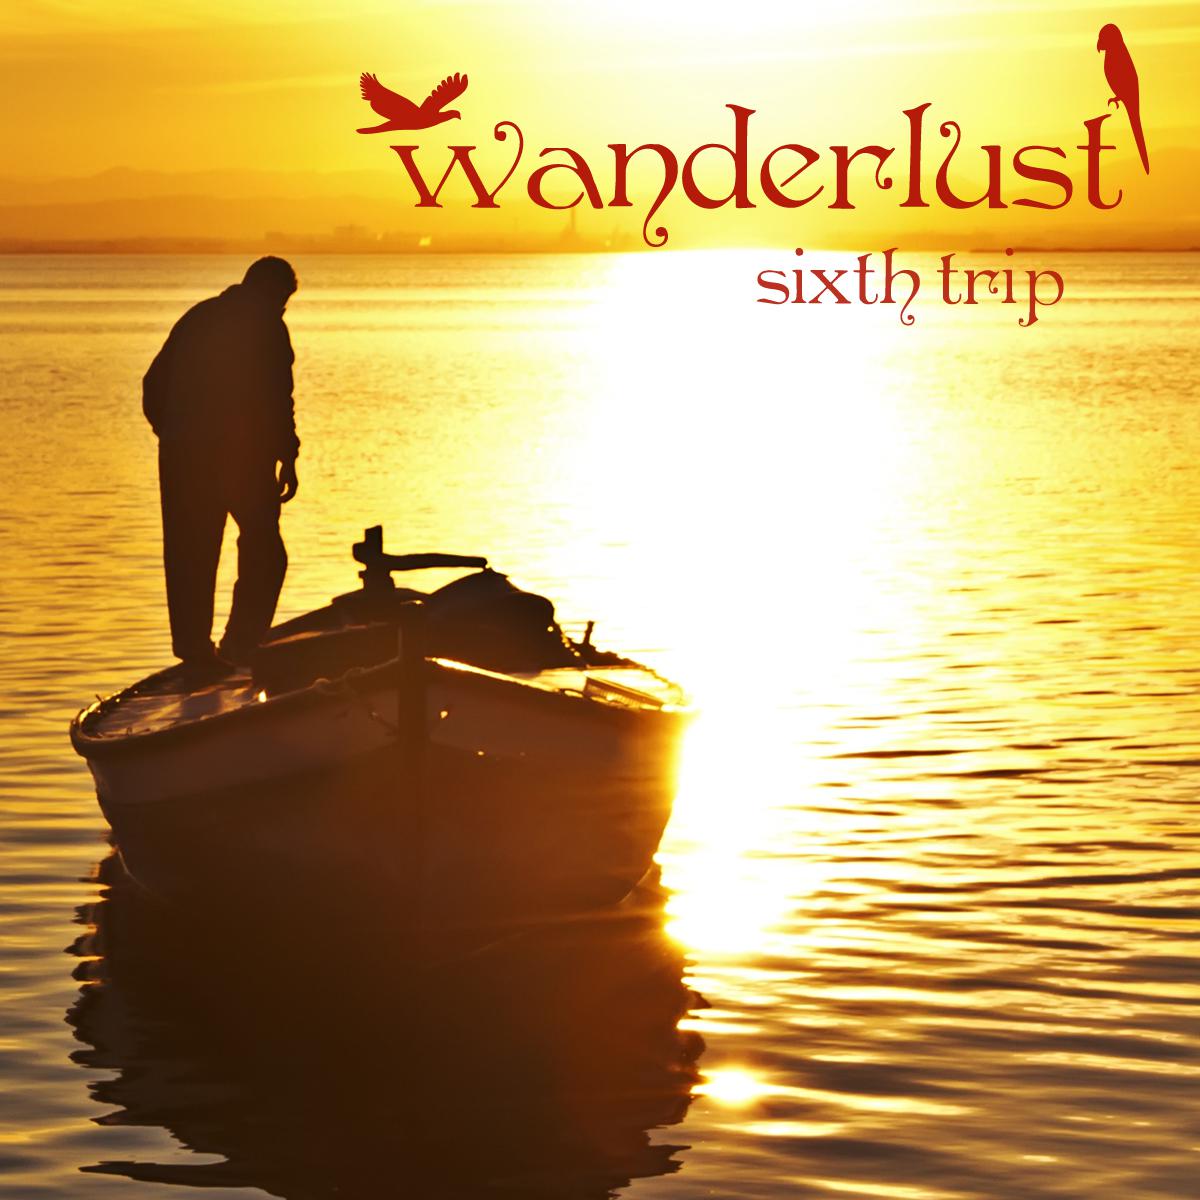 Wanderlust - Sixth Trip